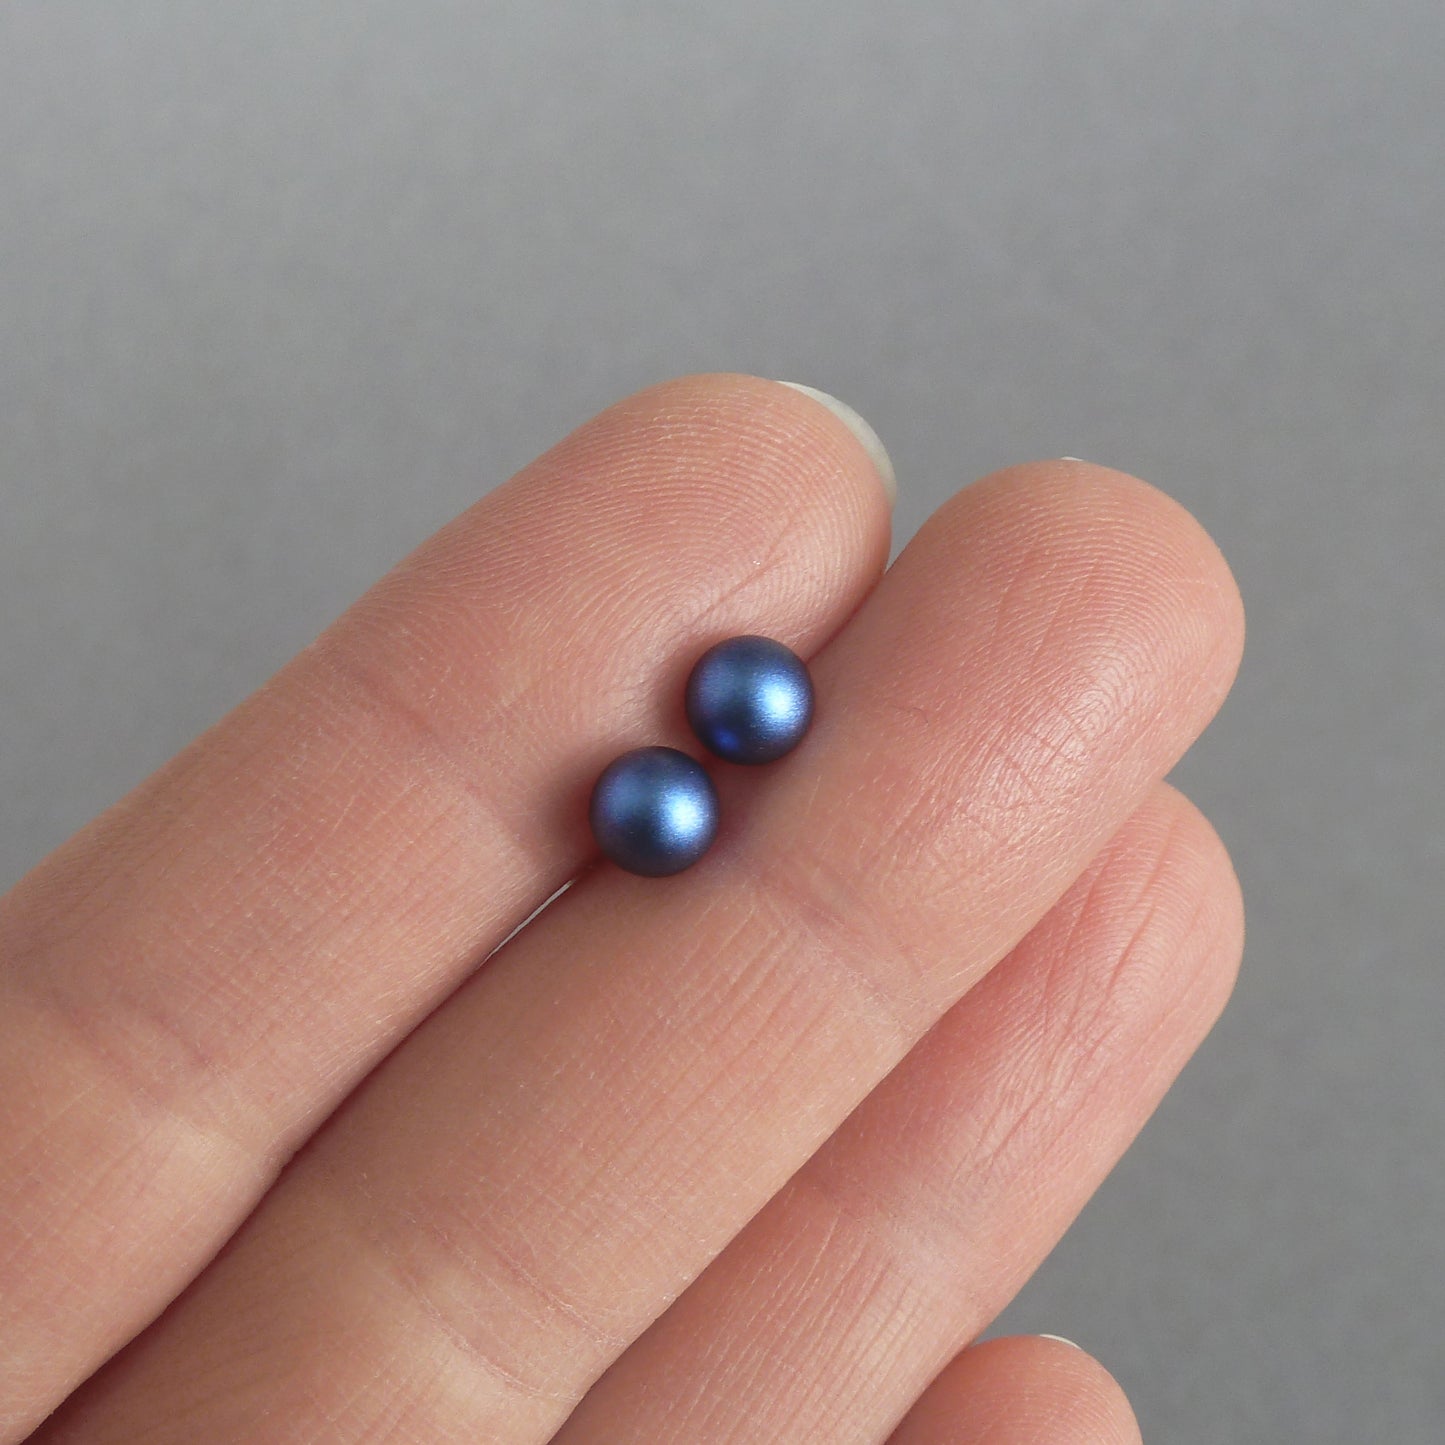 Small dark blue pearl stud earrings